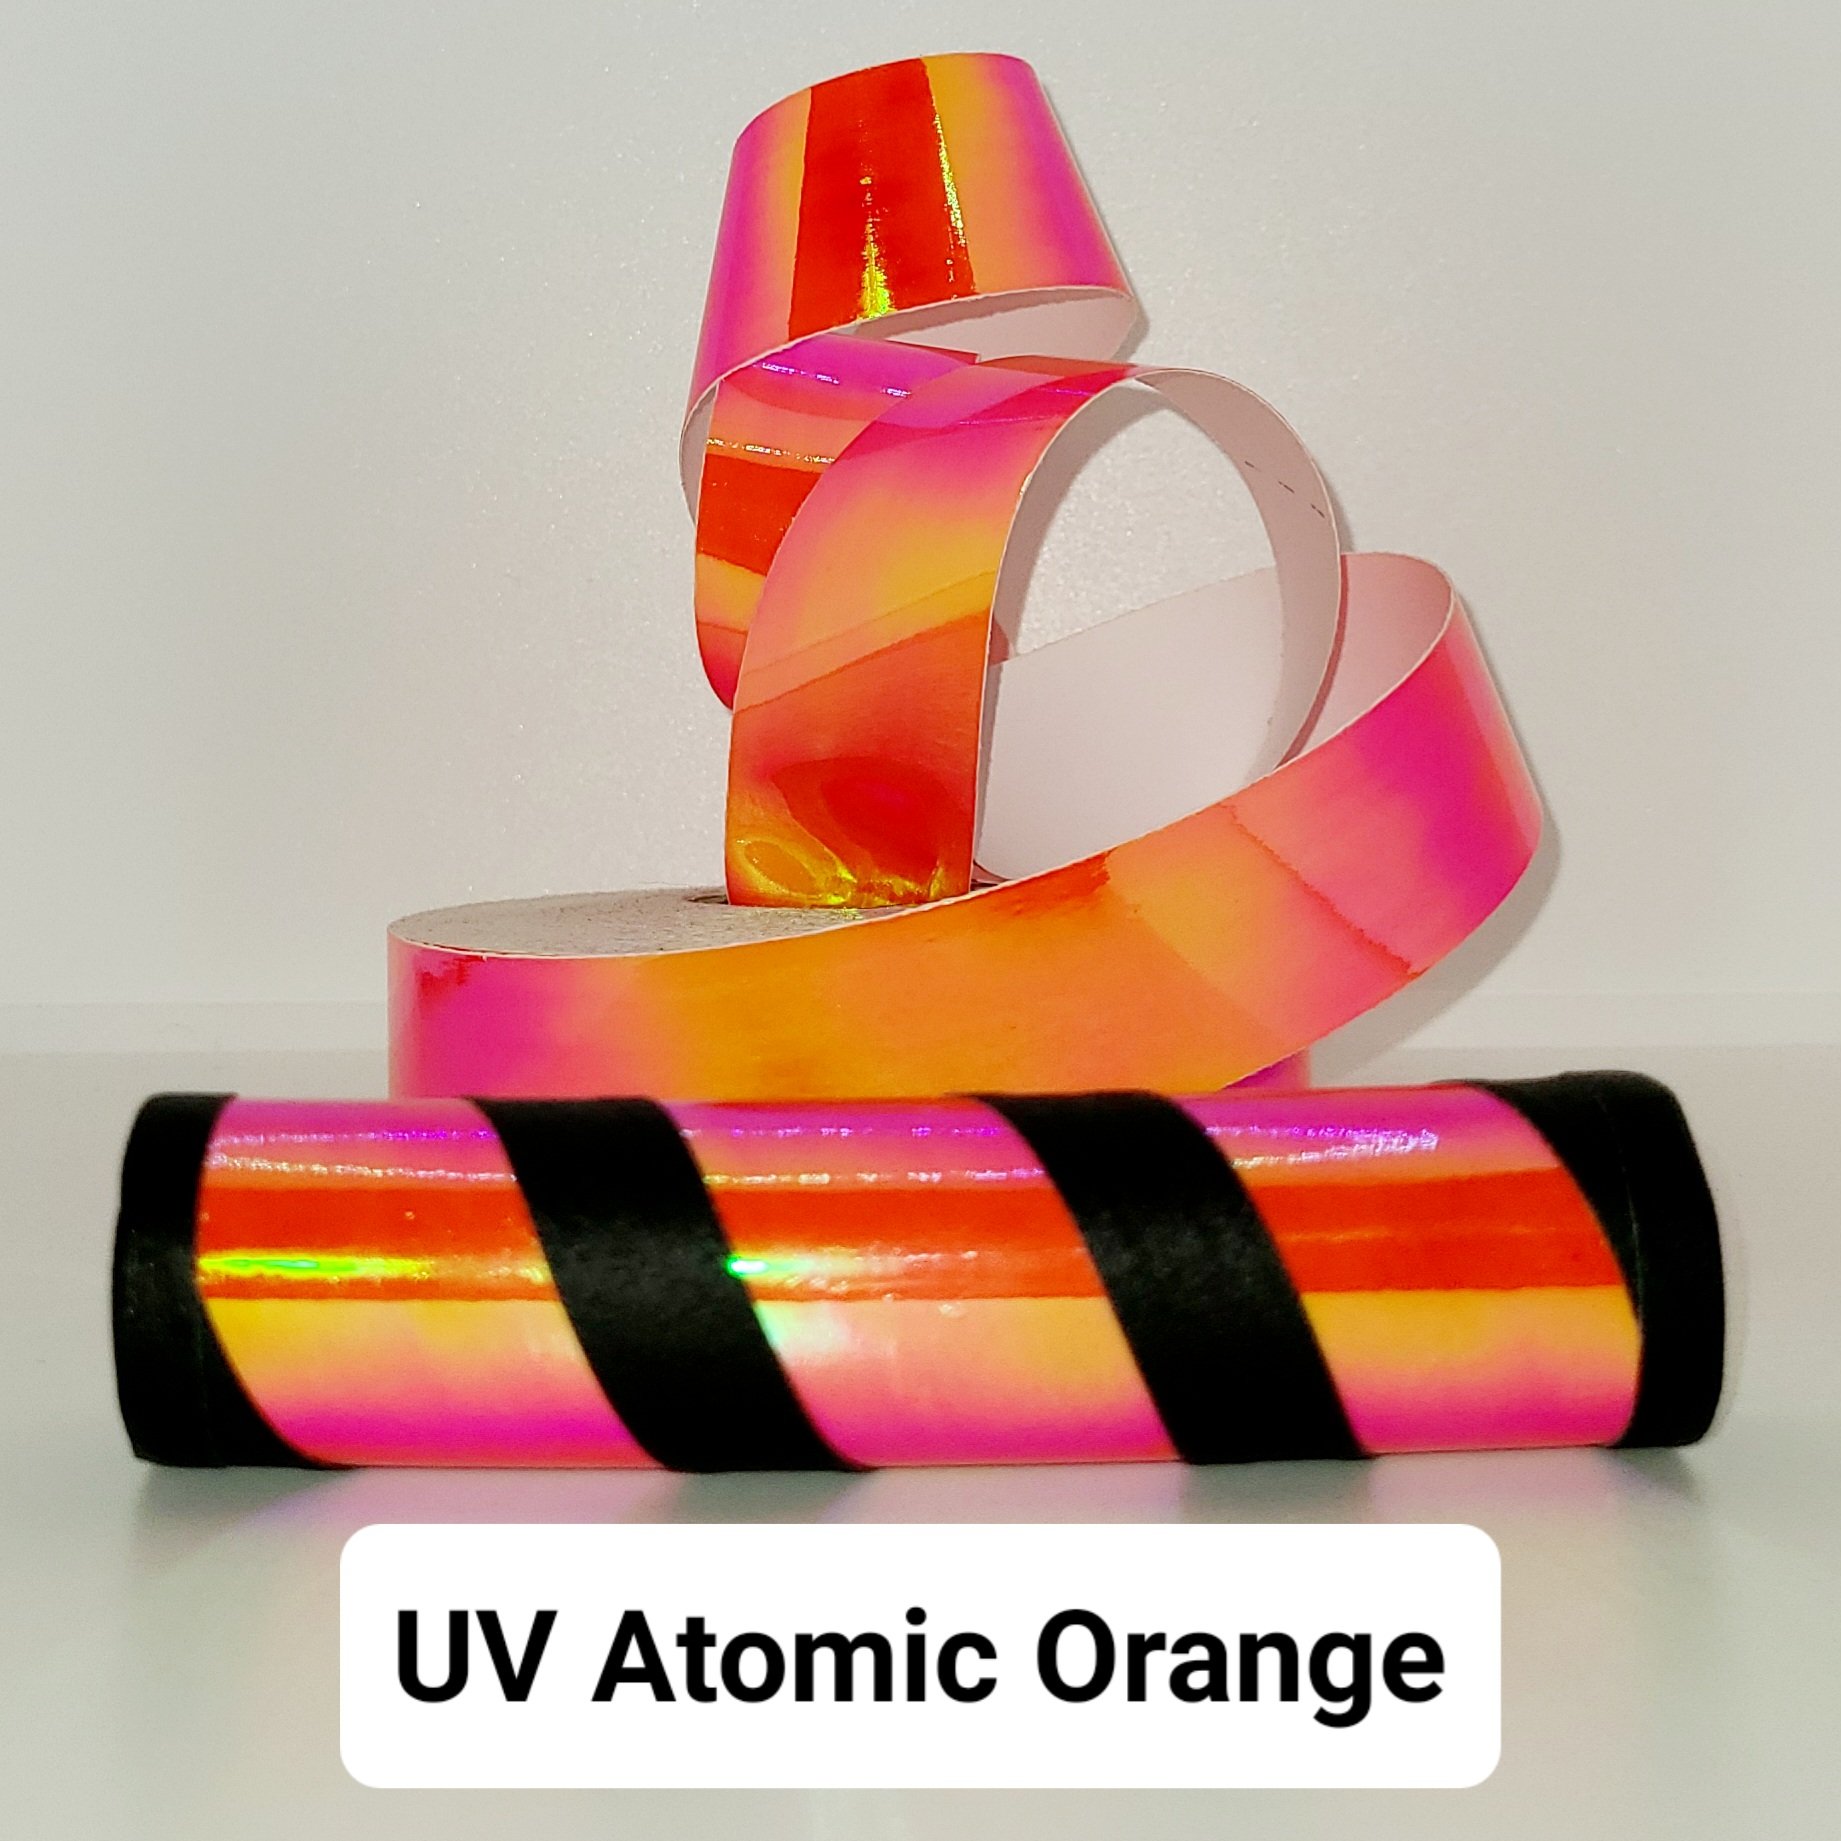 UV Atomic Orange (body hoop)